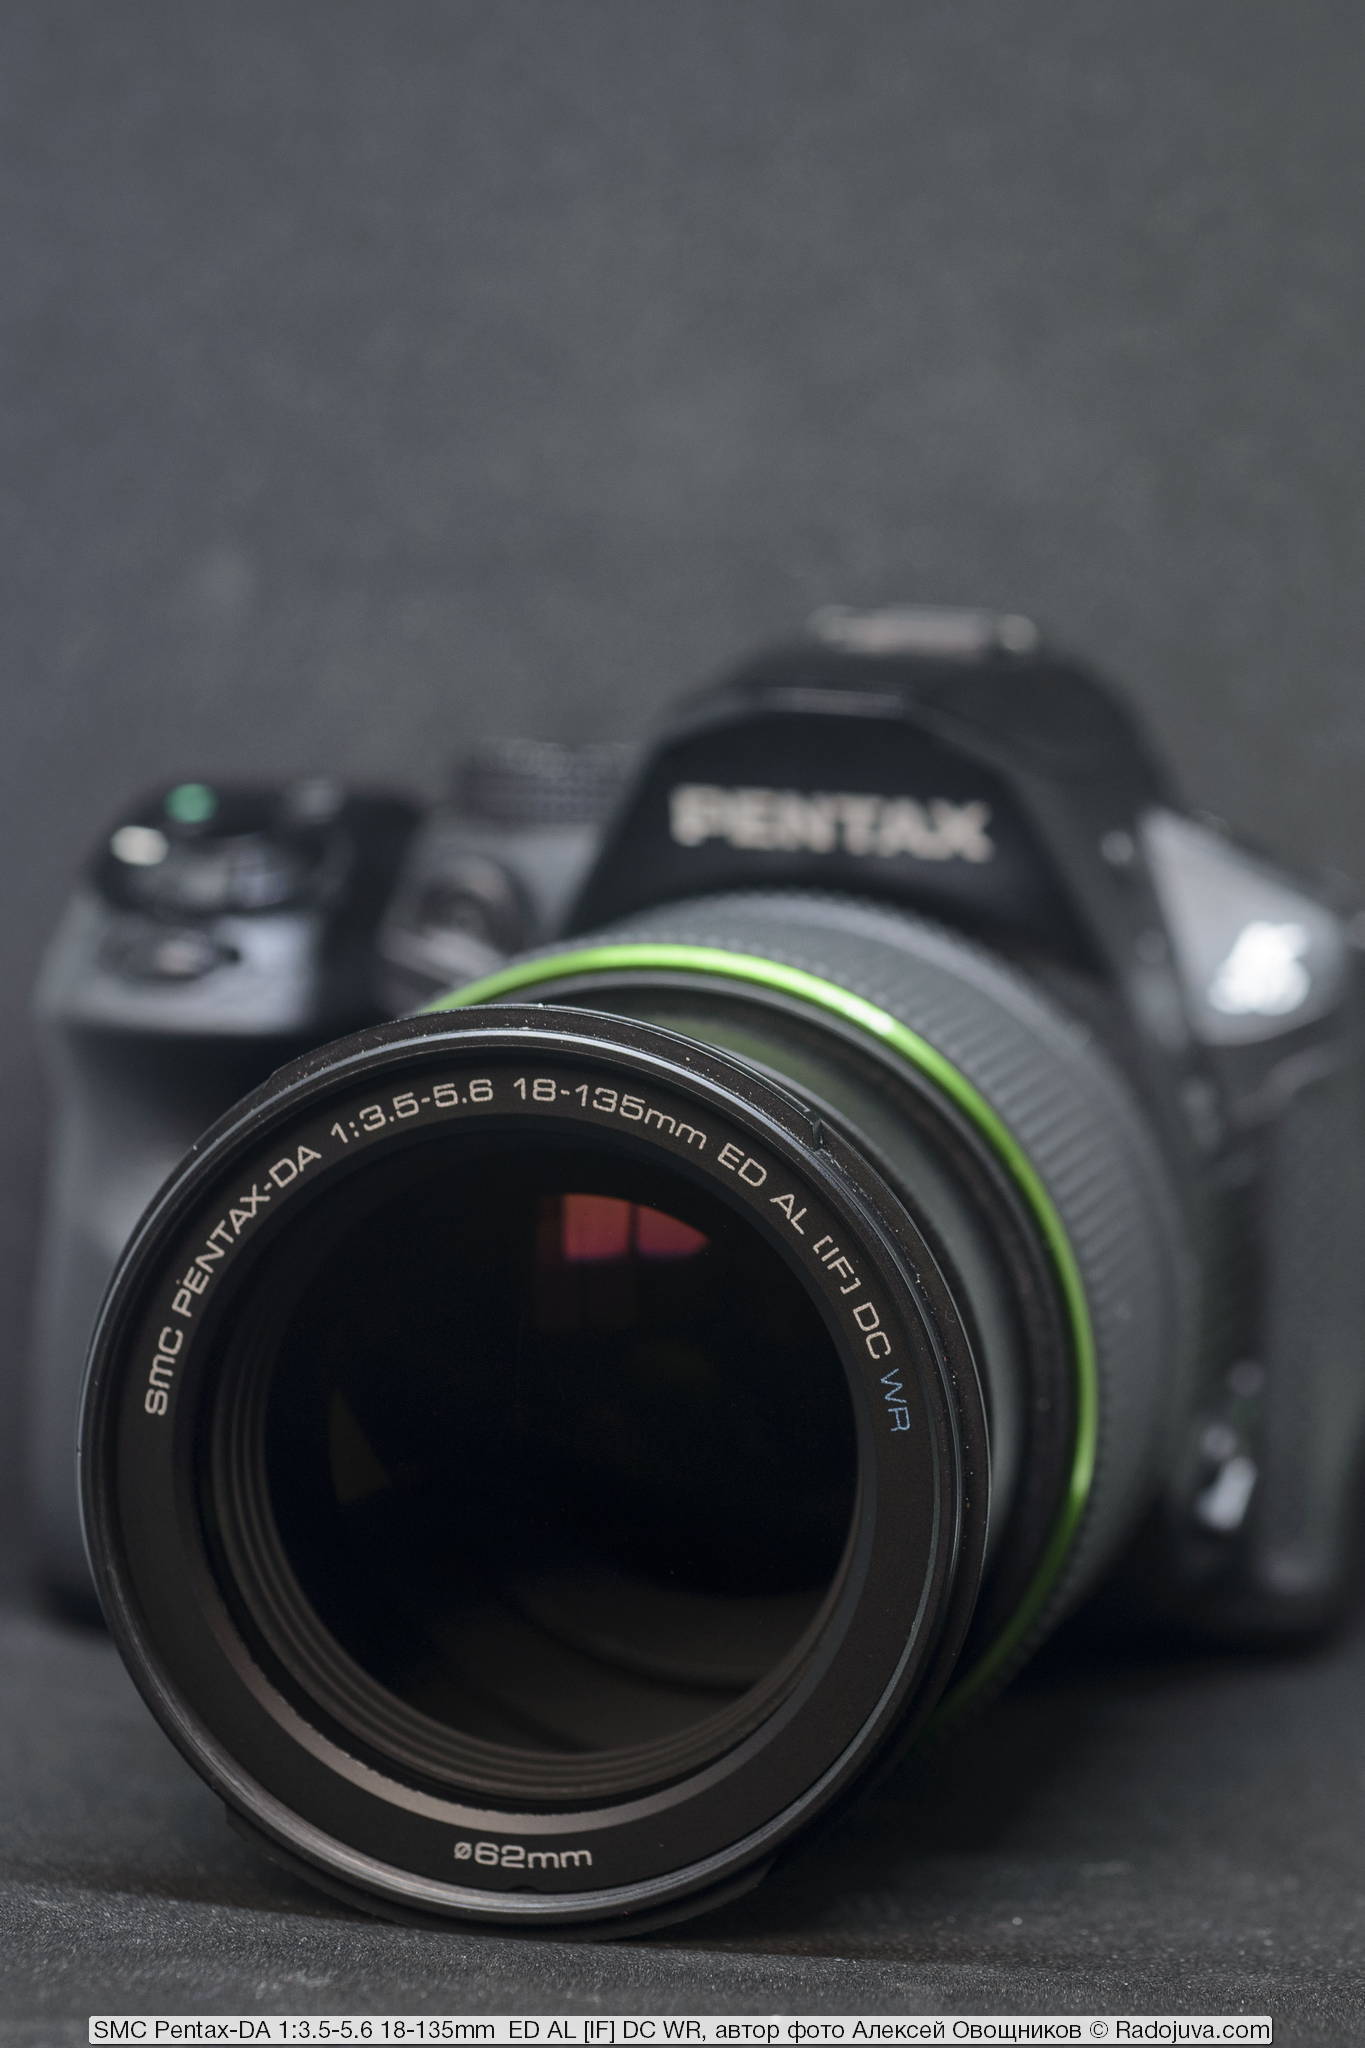 SMC Pentax-DA 1: 3.5-5.6 18-135mm ED AL [IF] DC WR. Review from 